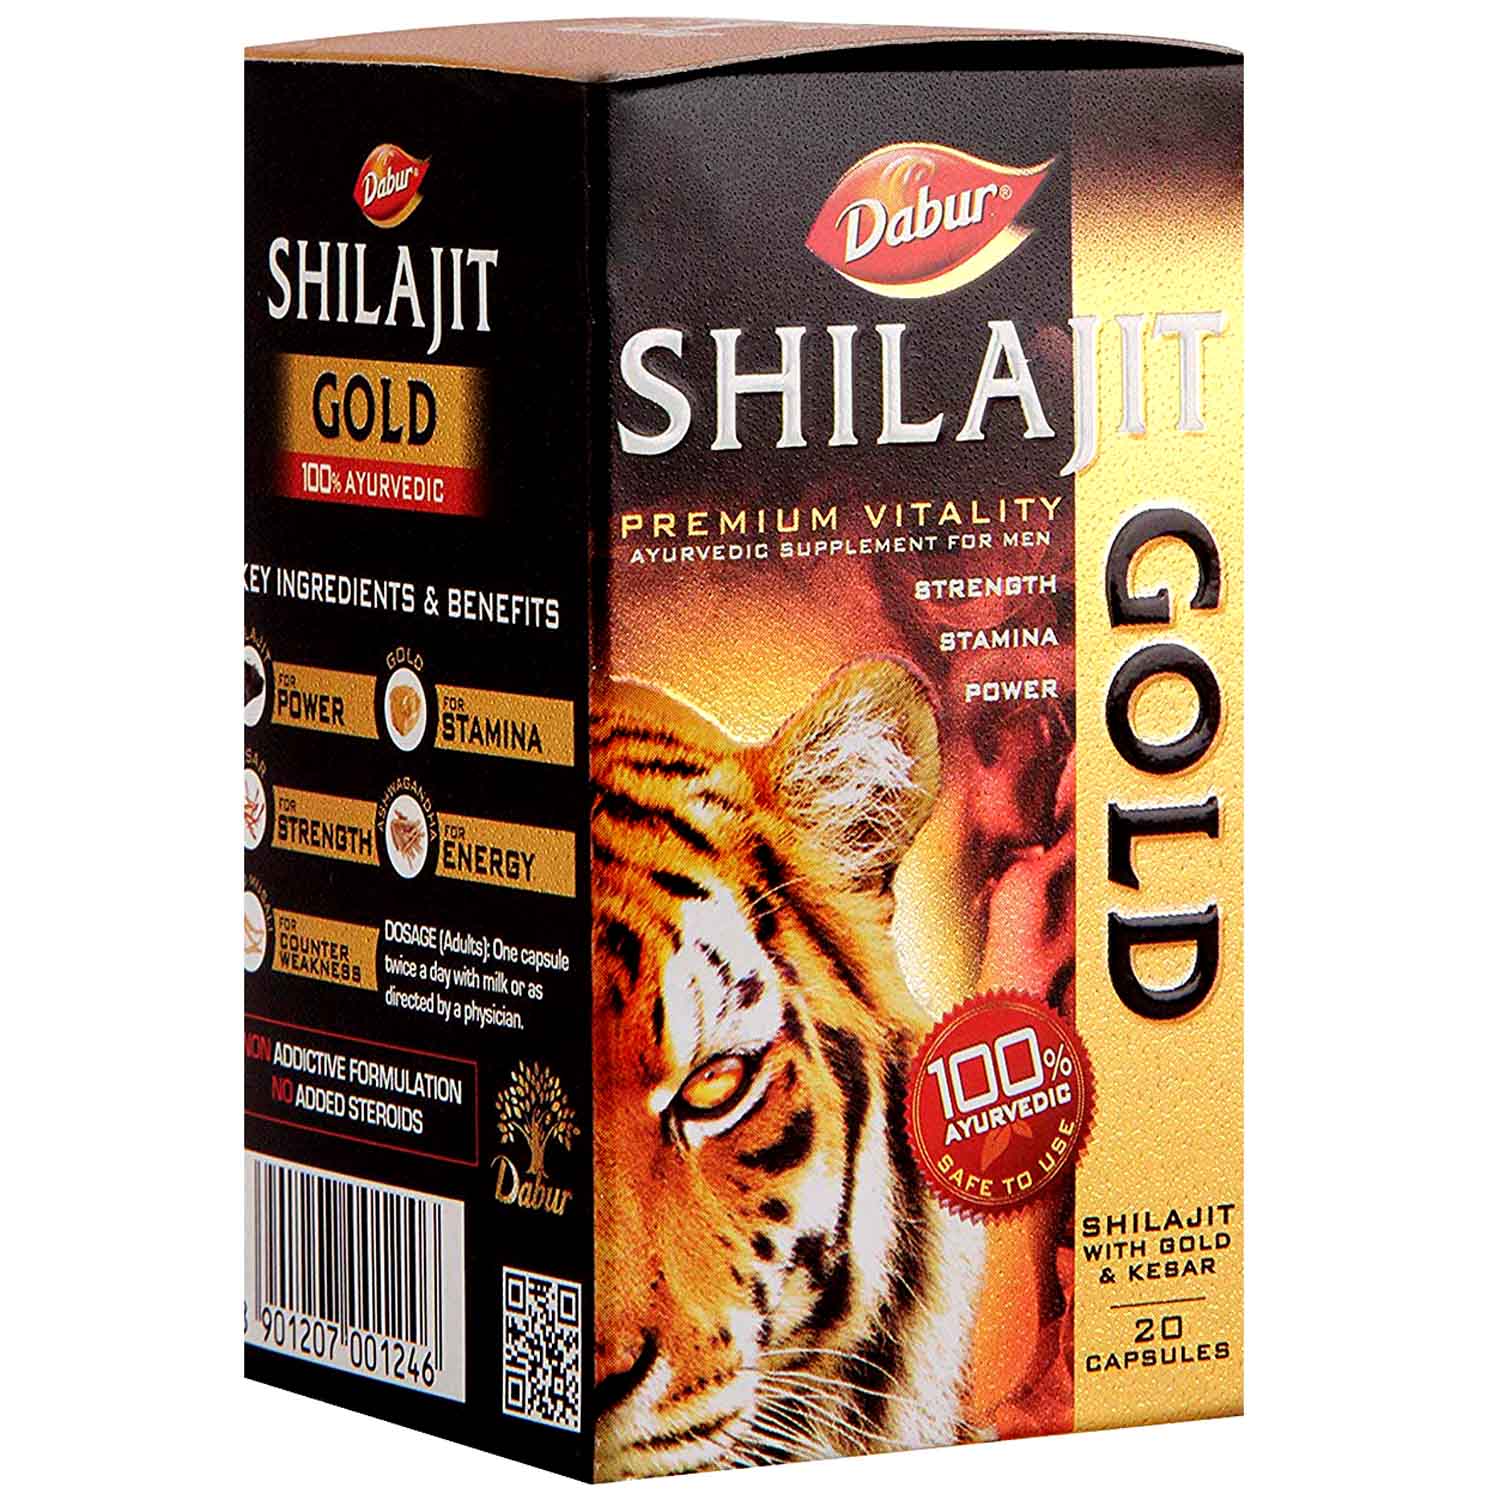 Dabur Shilajit Gold, 20 Capsules Price, Uses, Side Effects ...